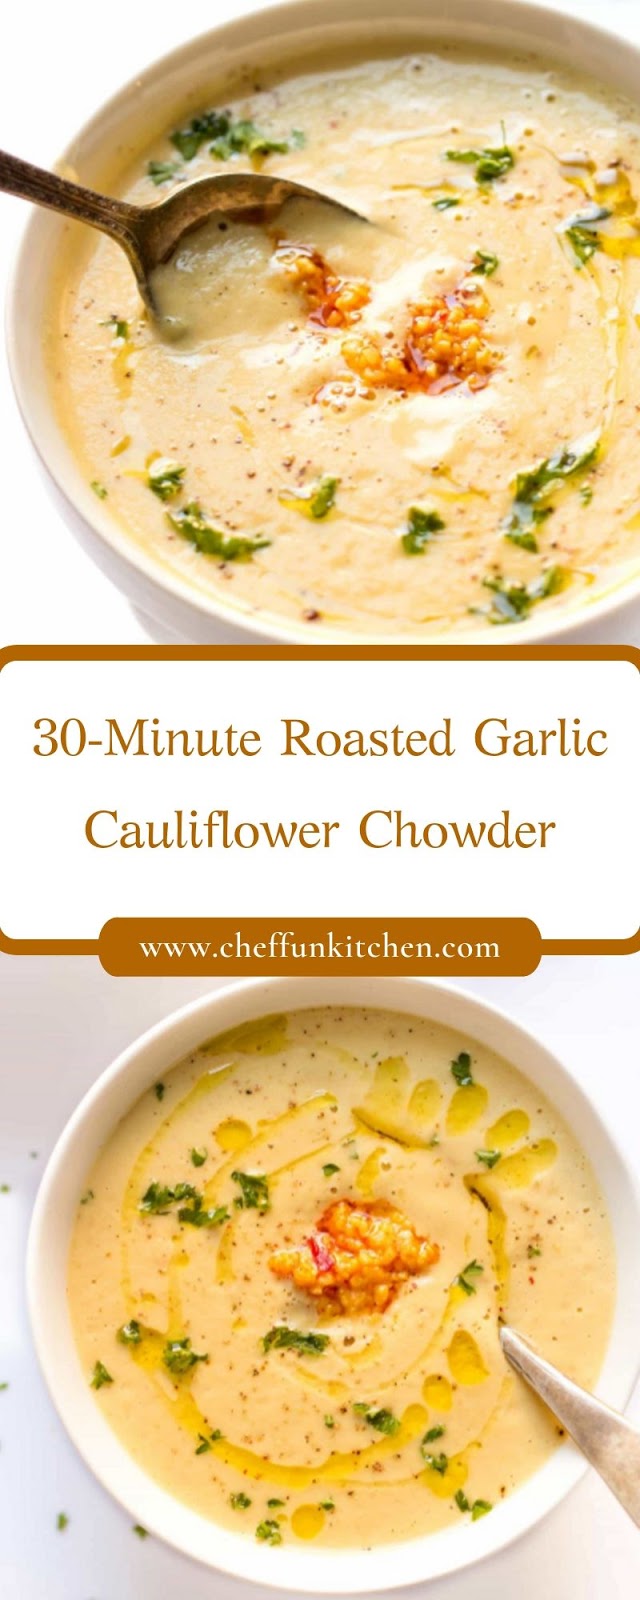 30-Minute Roasted Garlic Cauliflower Chowder